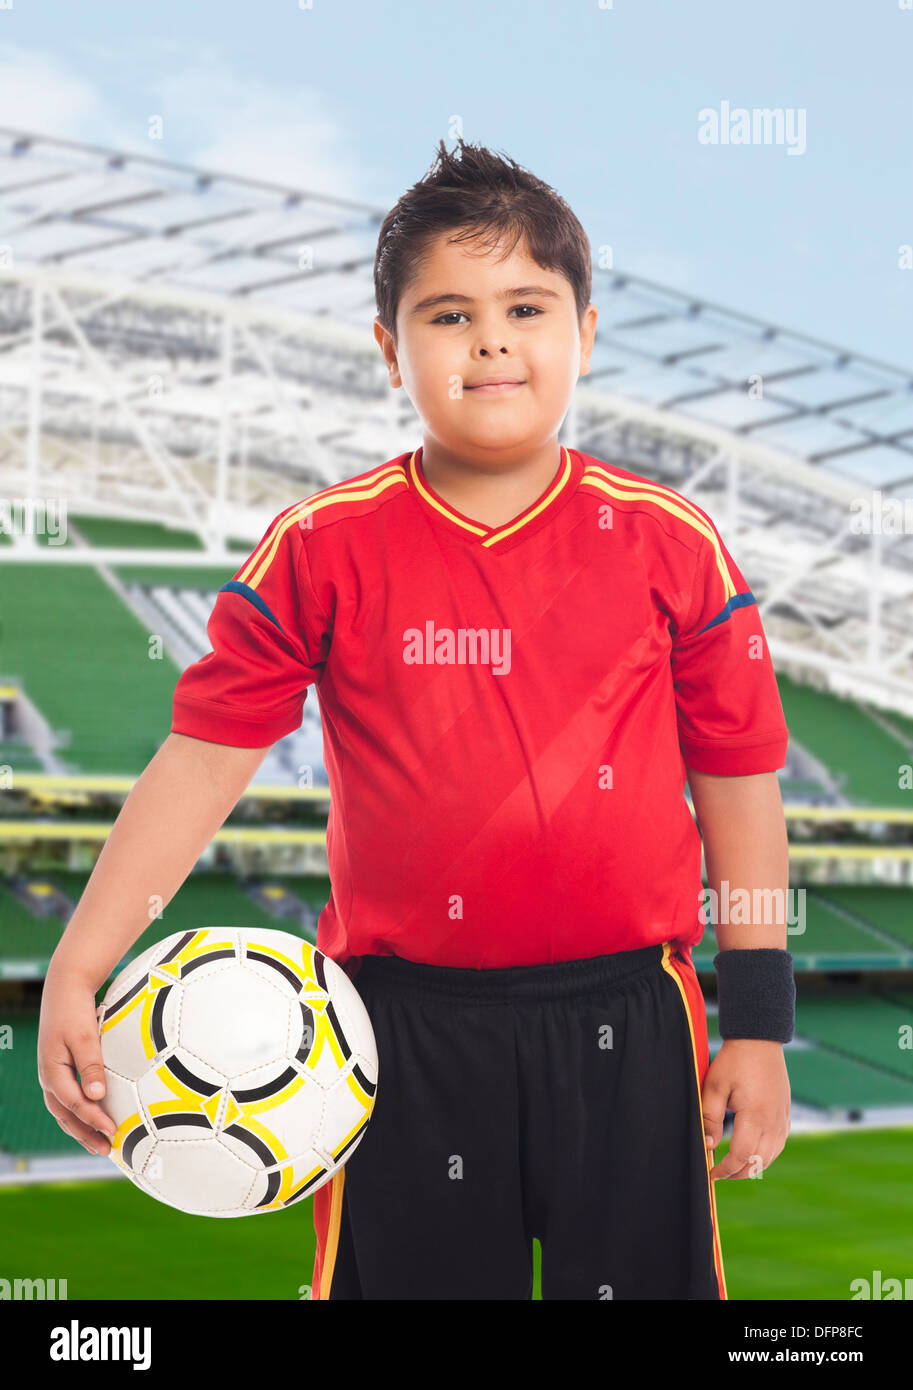 Boy carrying a soccer ball Stock Photo